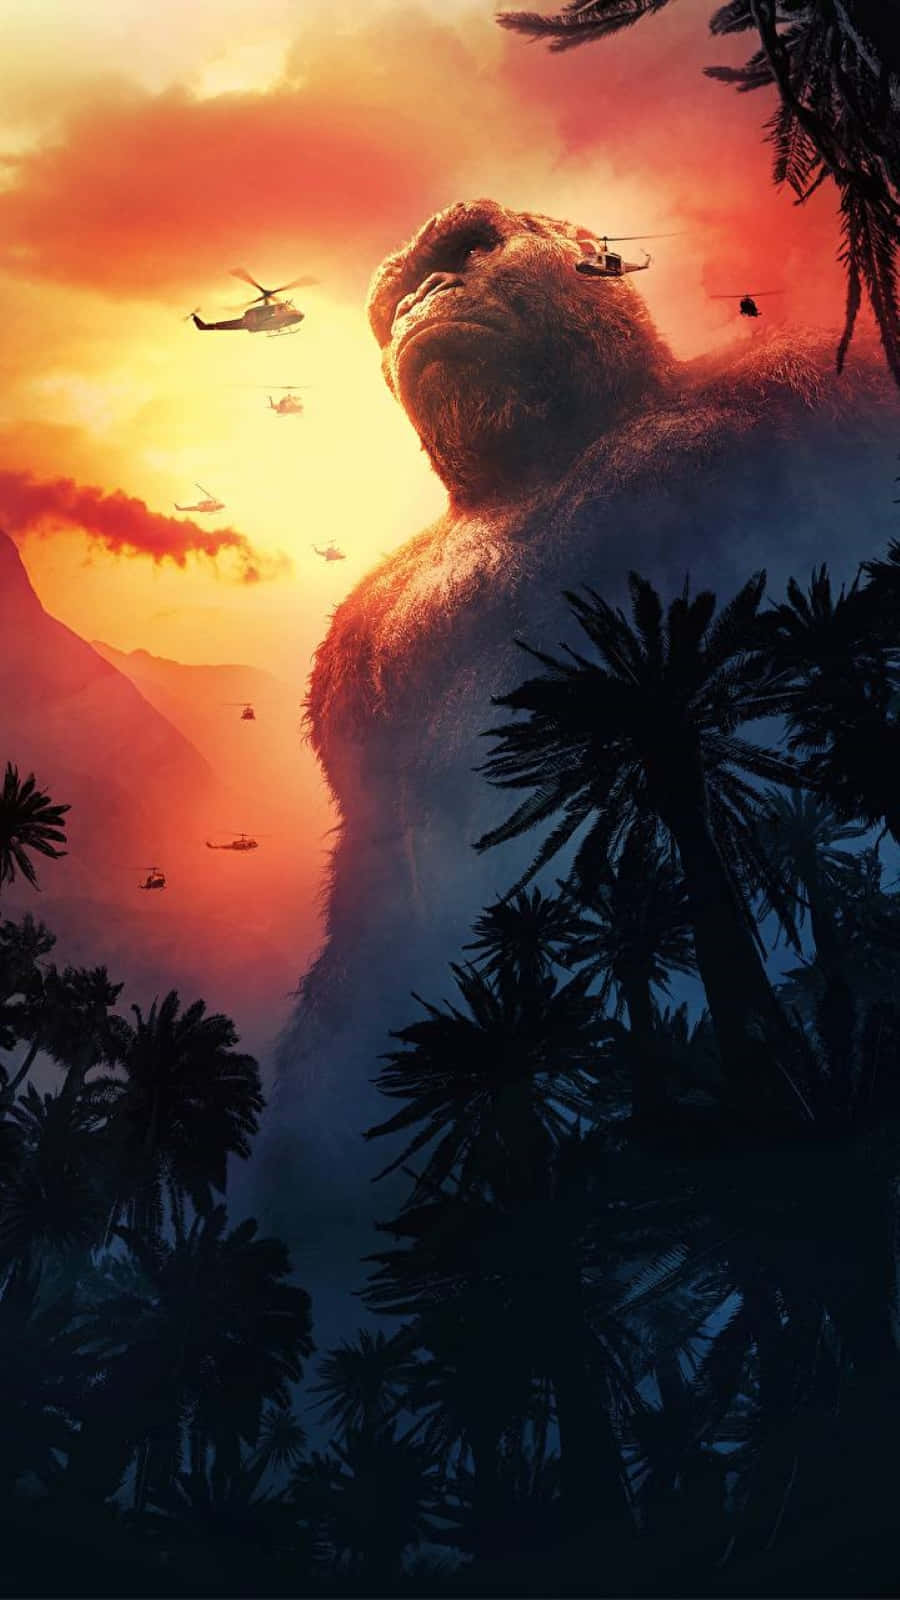 King Kong Dominating the Skyline Wallpaper